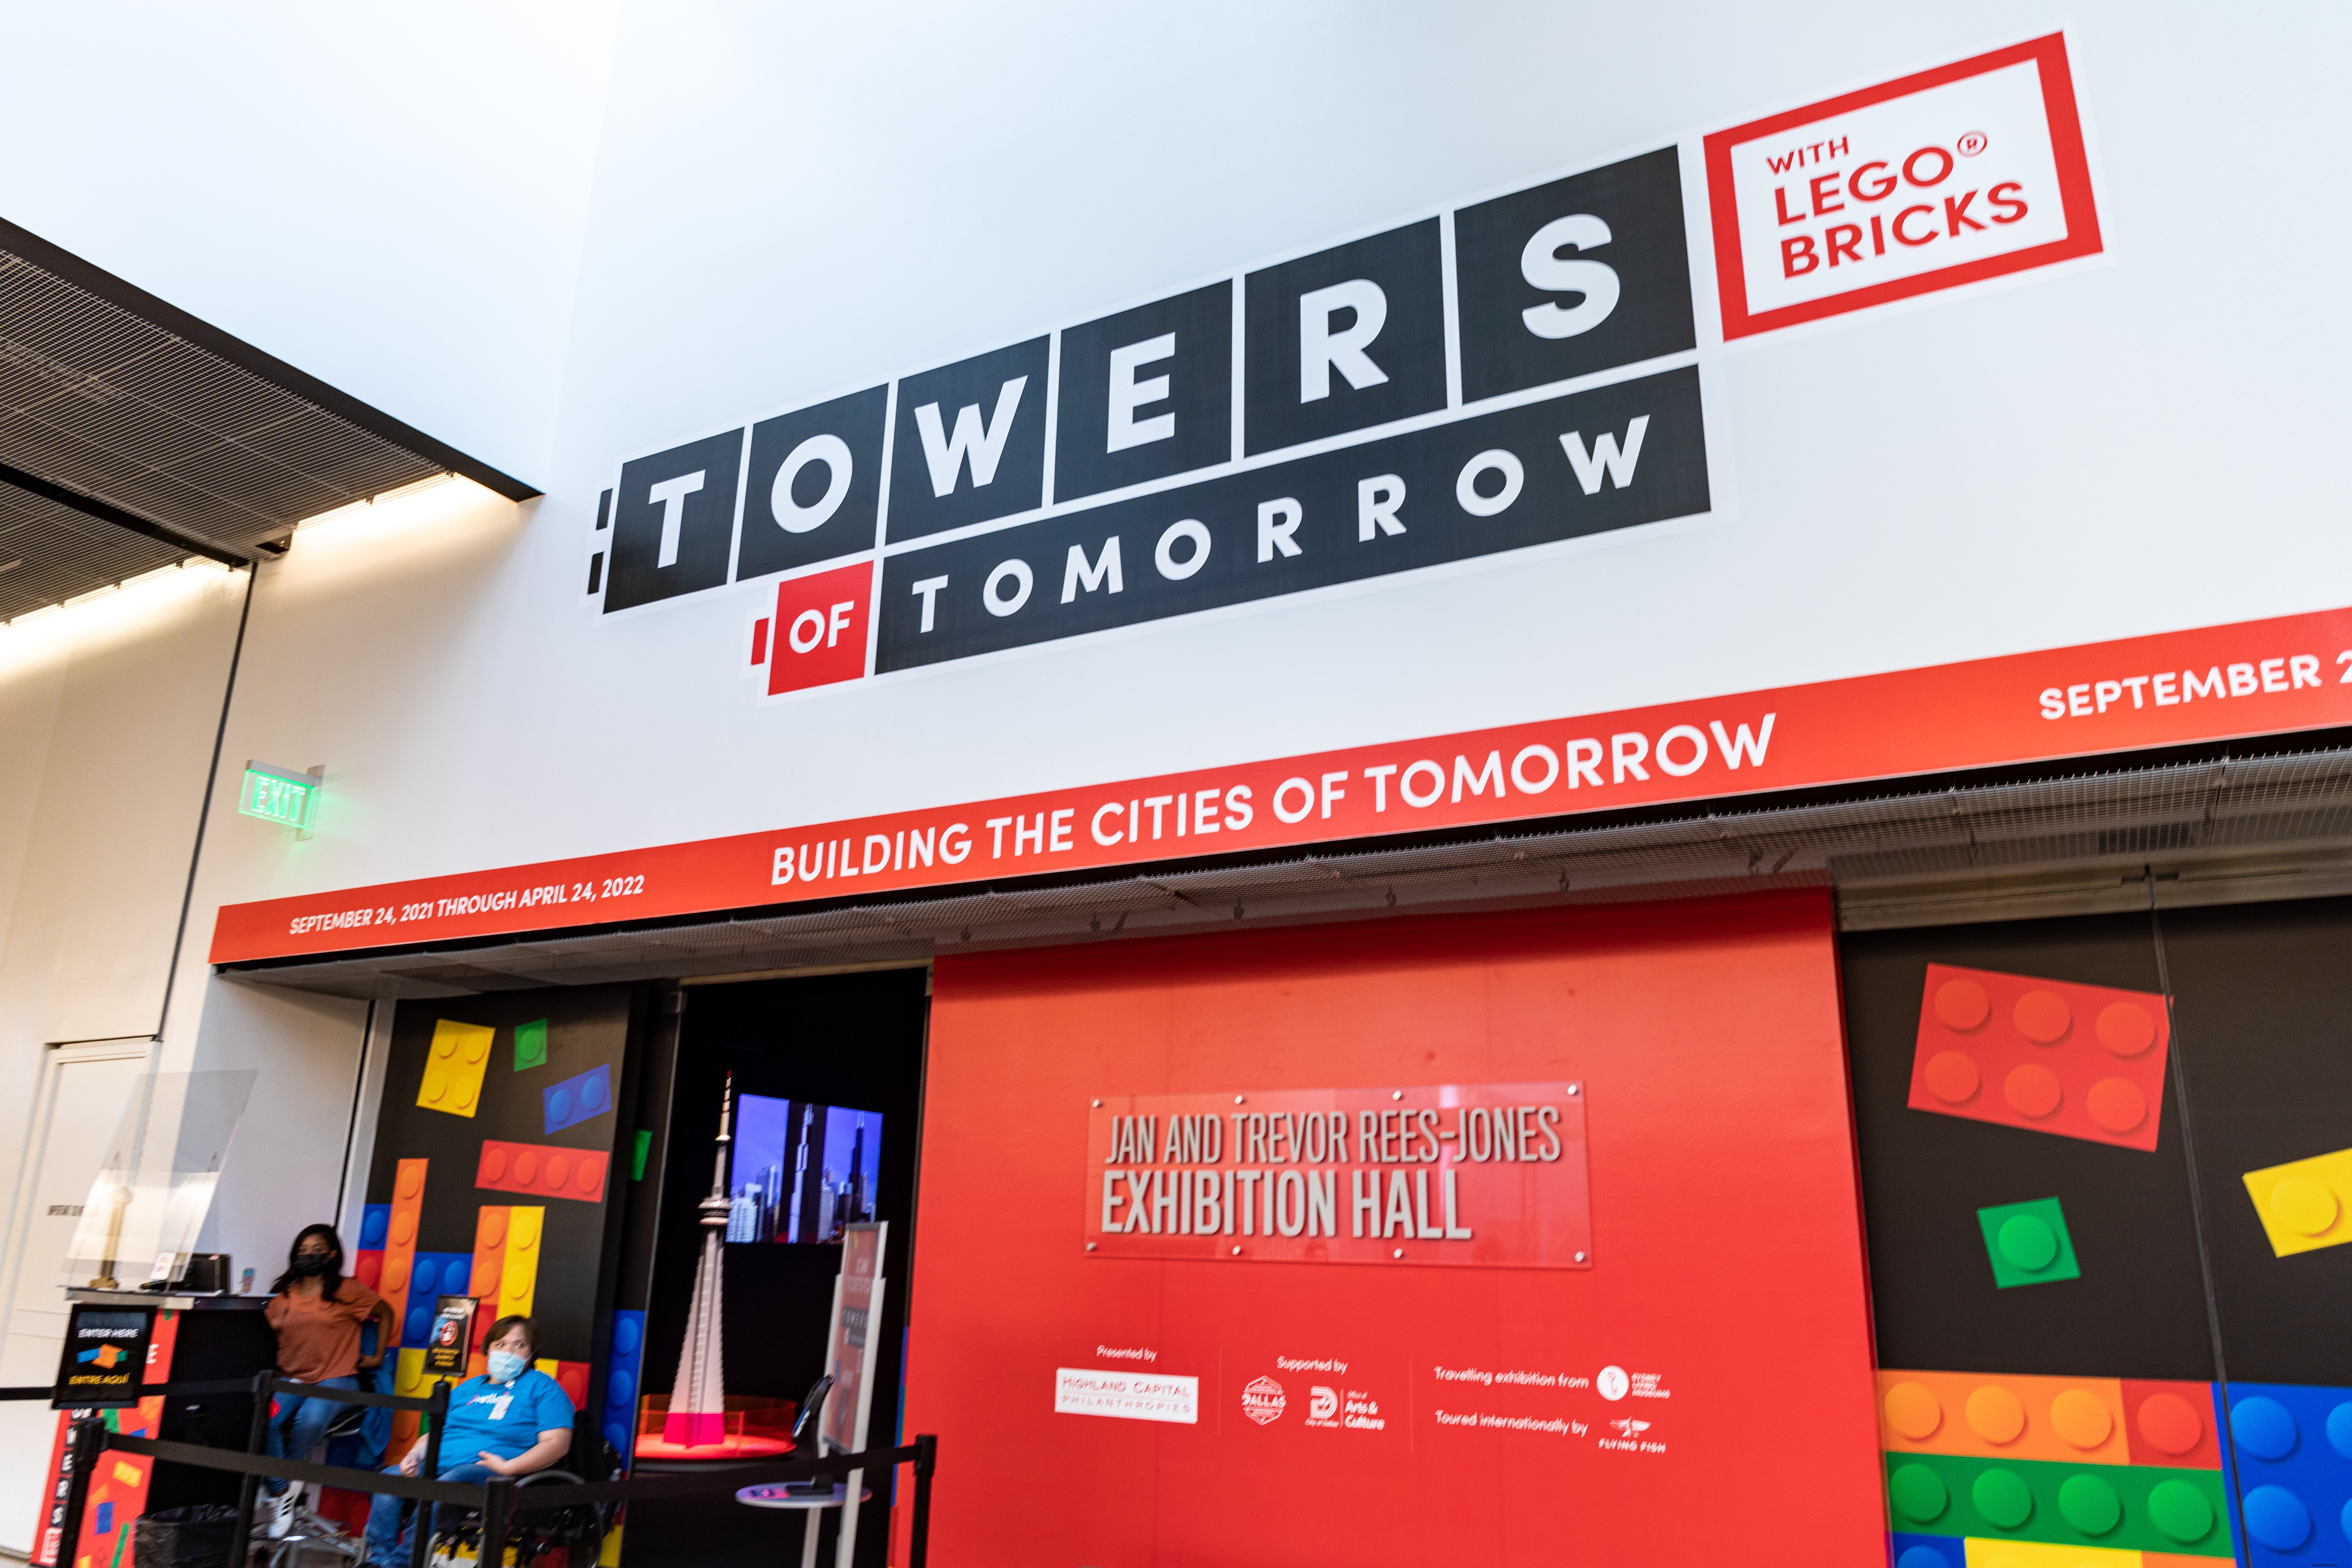 Jelajahi Pameran Terbaru Museum Perot:Towers of Tomorrow dengan LEGO Bricks 